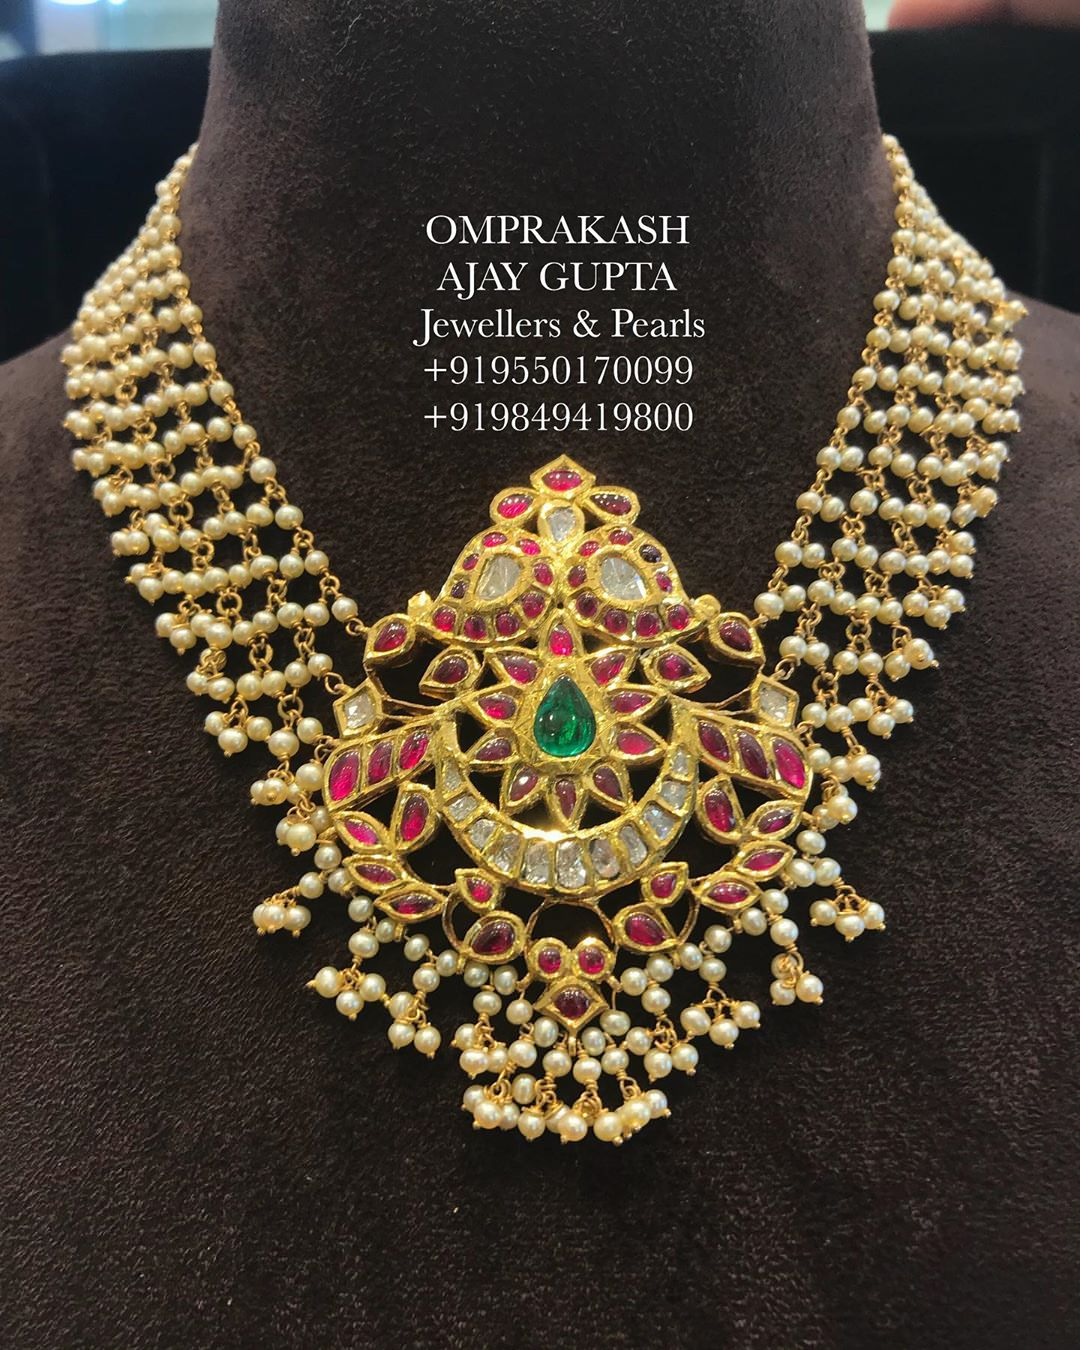 Pearl chain with Hand crafted pendant! | Fashionworldhub